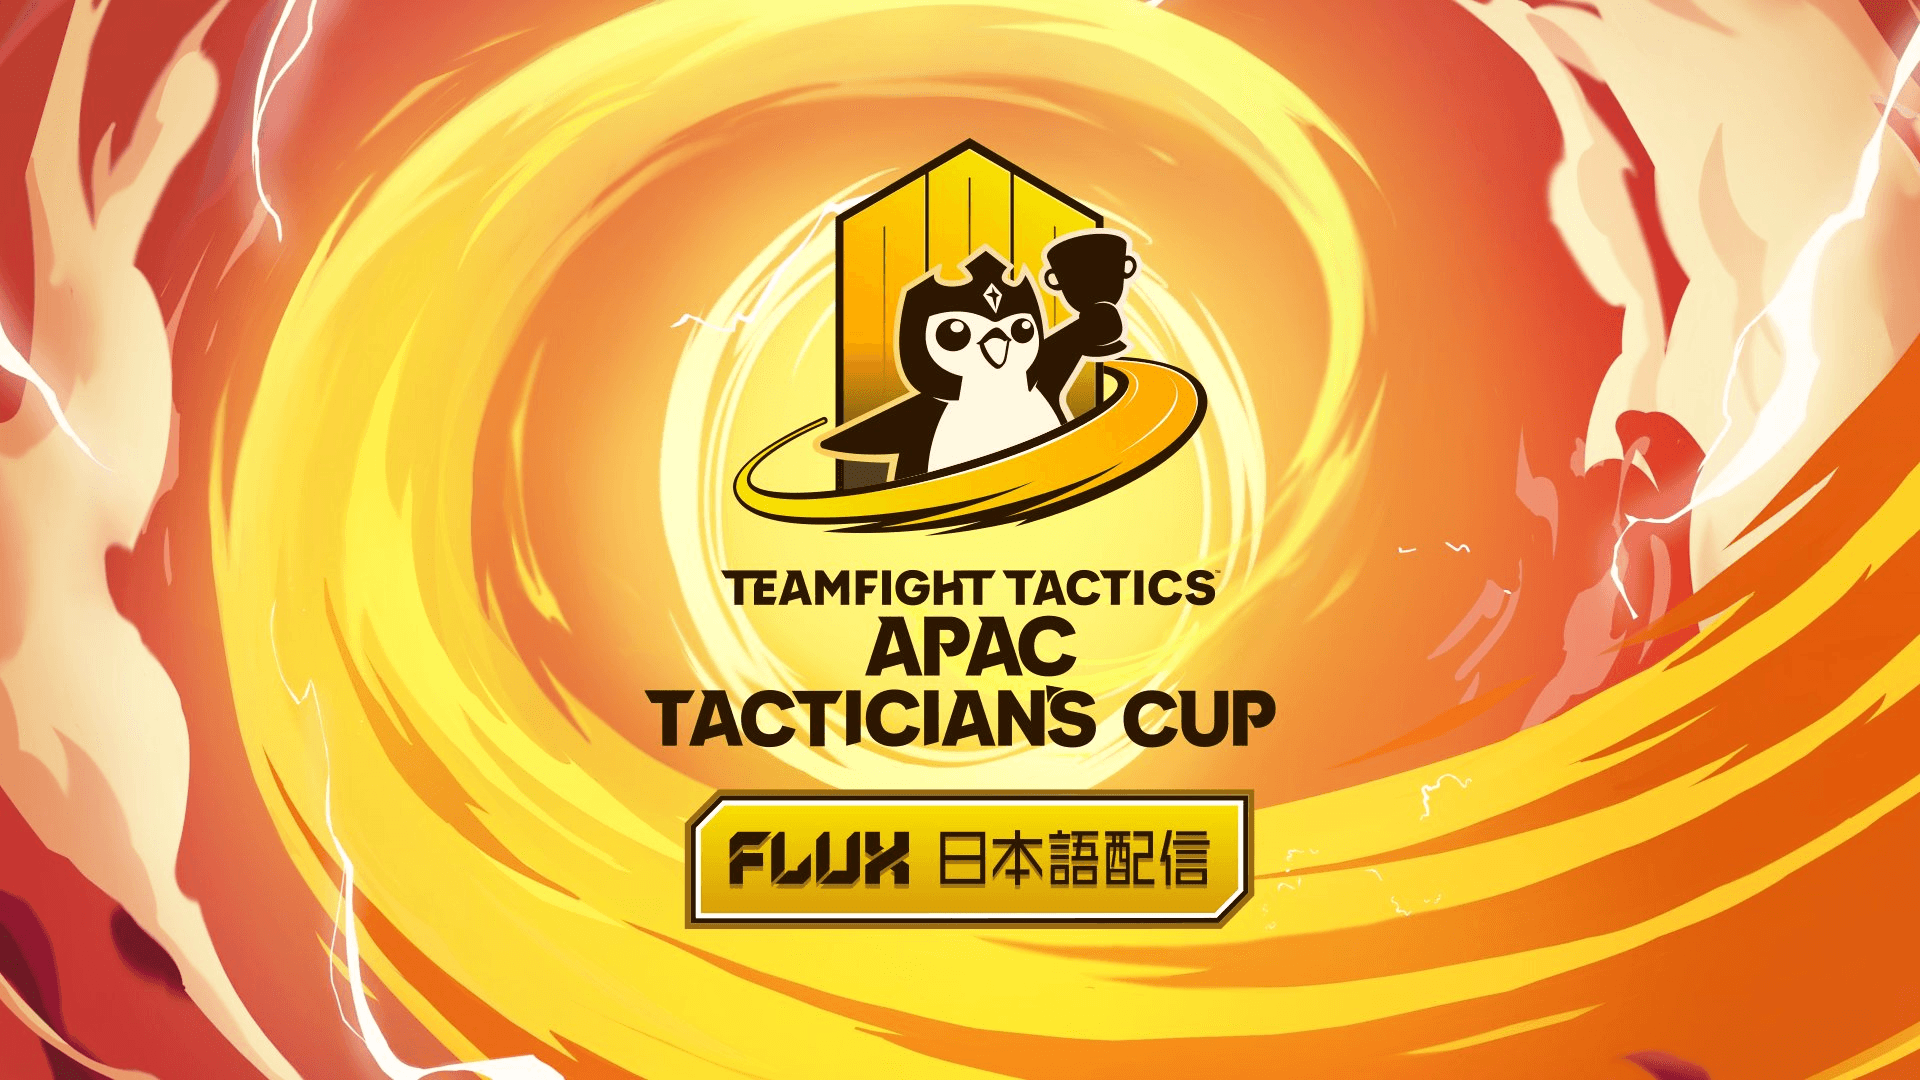 Teamfight Tactics APAC Tactician’s Cup I FLUX日本語配信 feature image